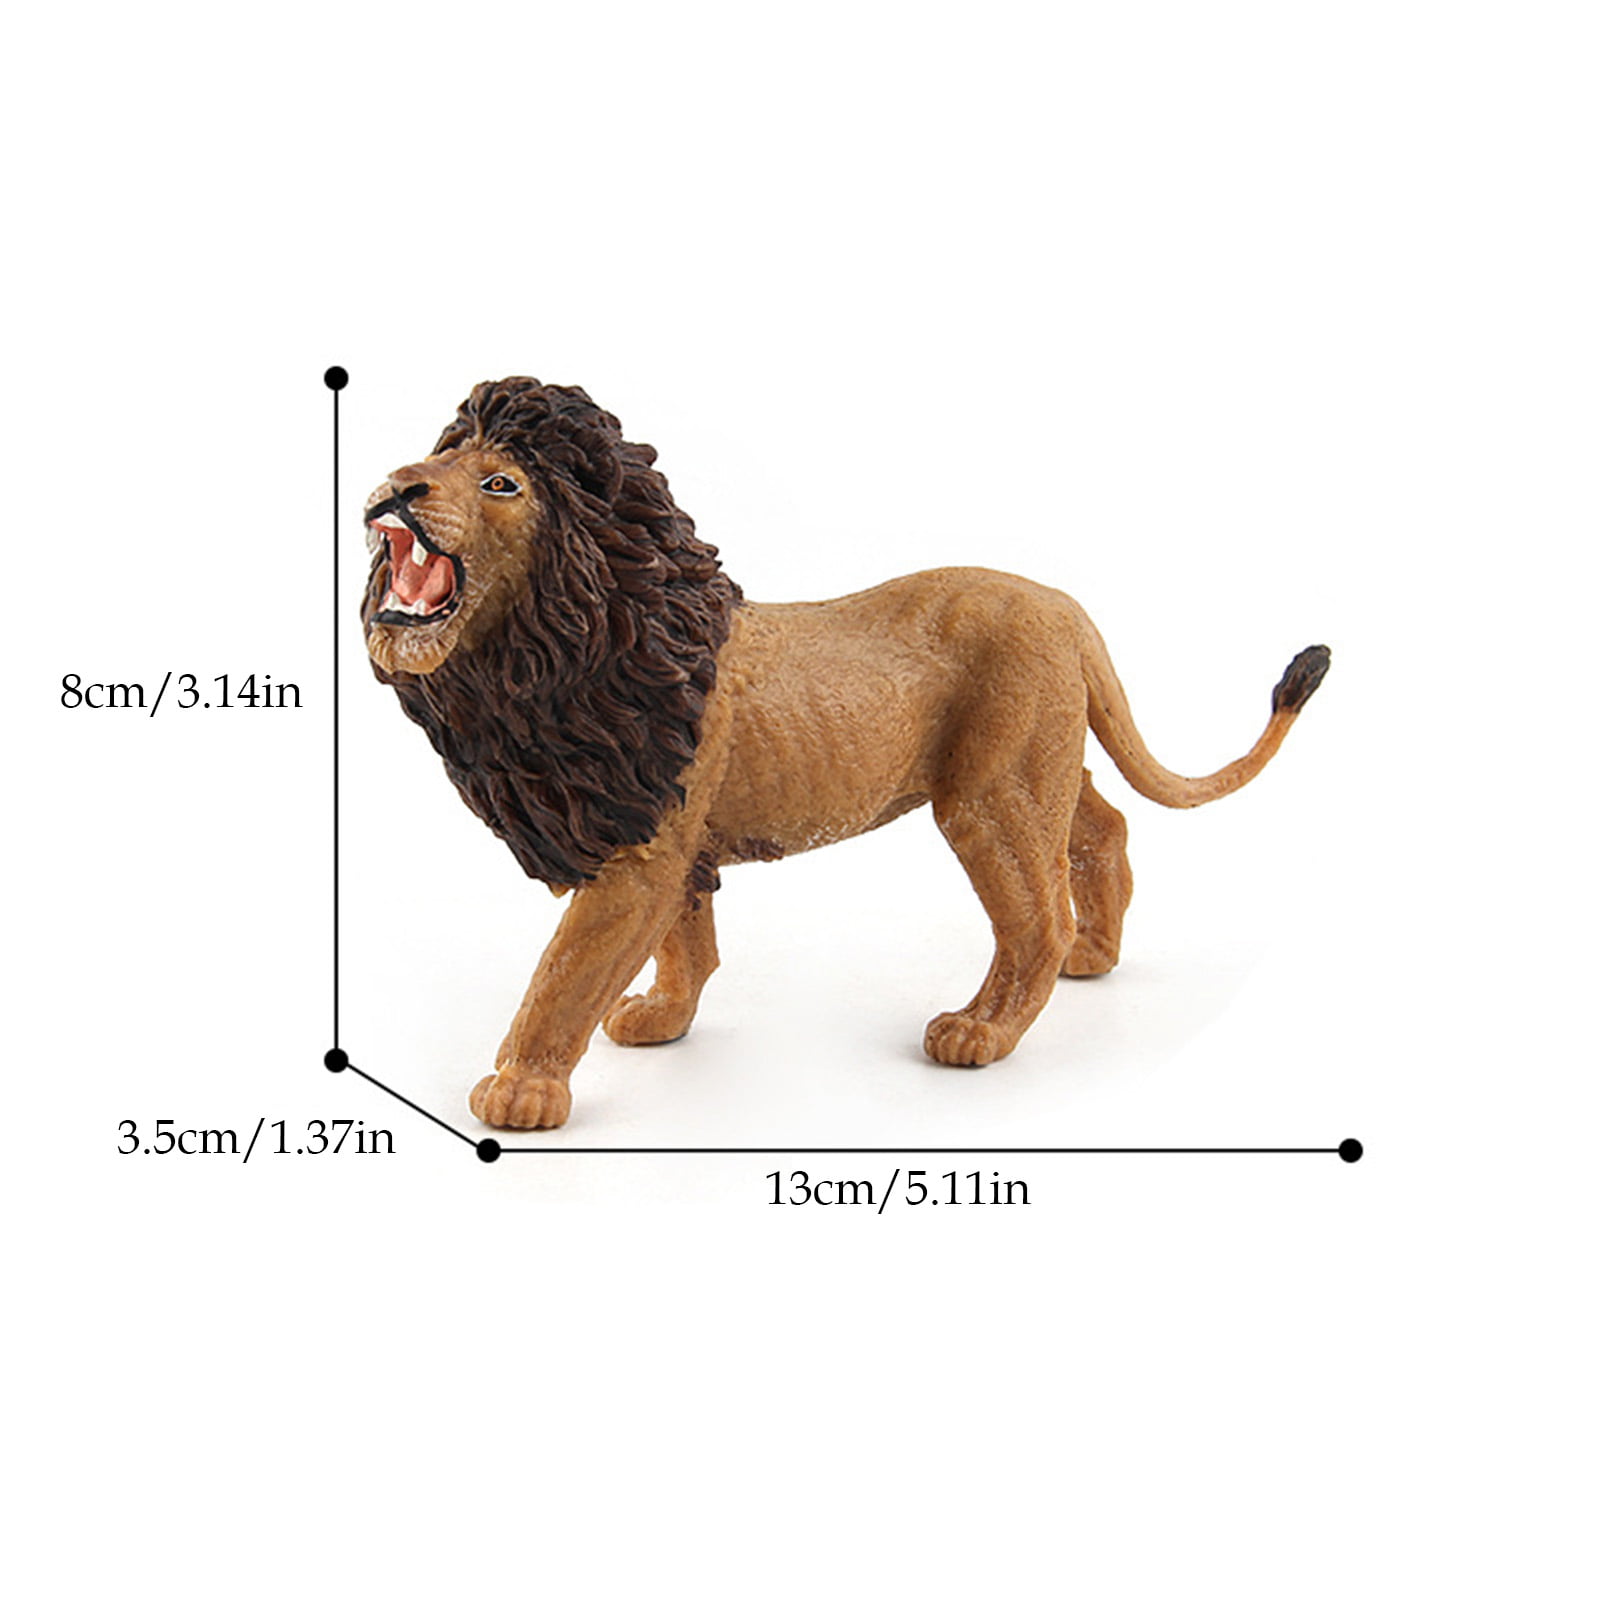 EDIBLE  LARGE JUNGLE ANIMAL LION BIRTHDAY 8cm high, 4-5cm wide